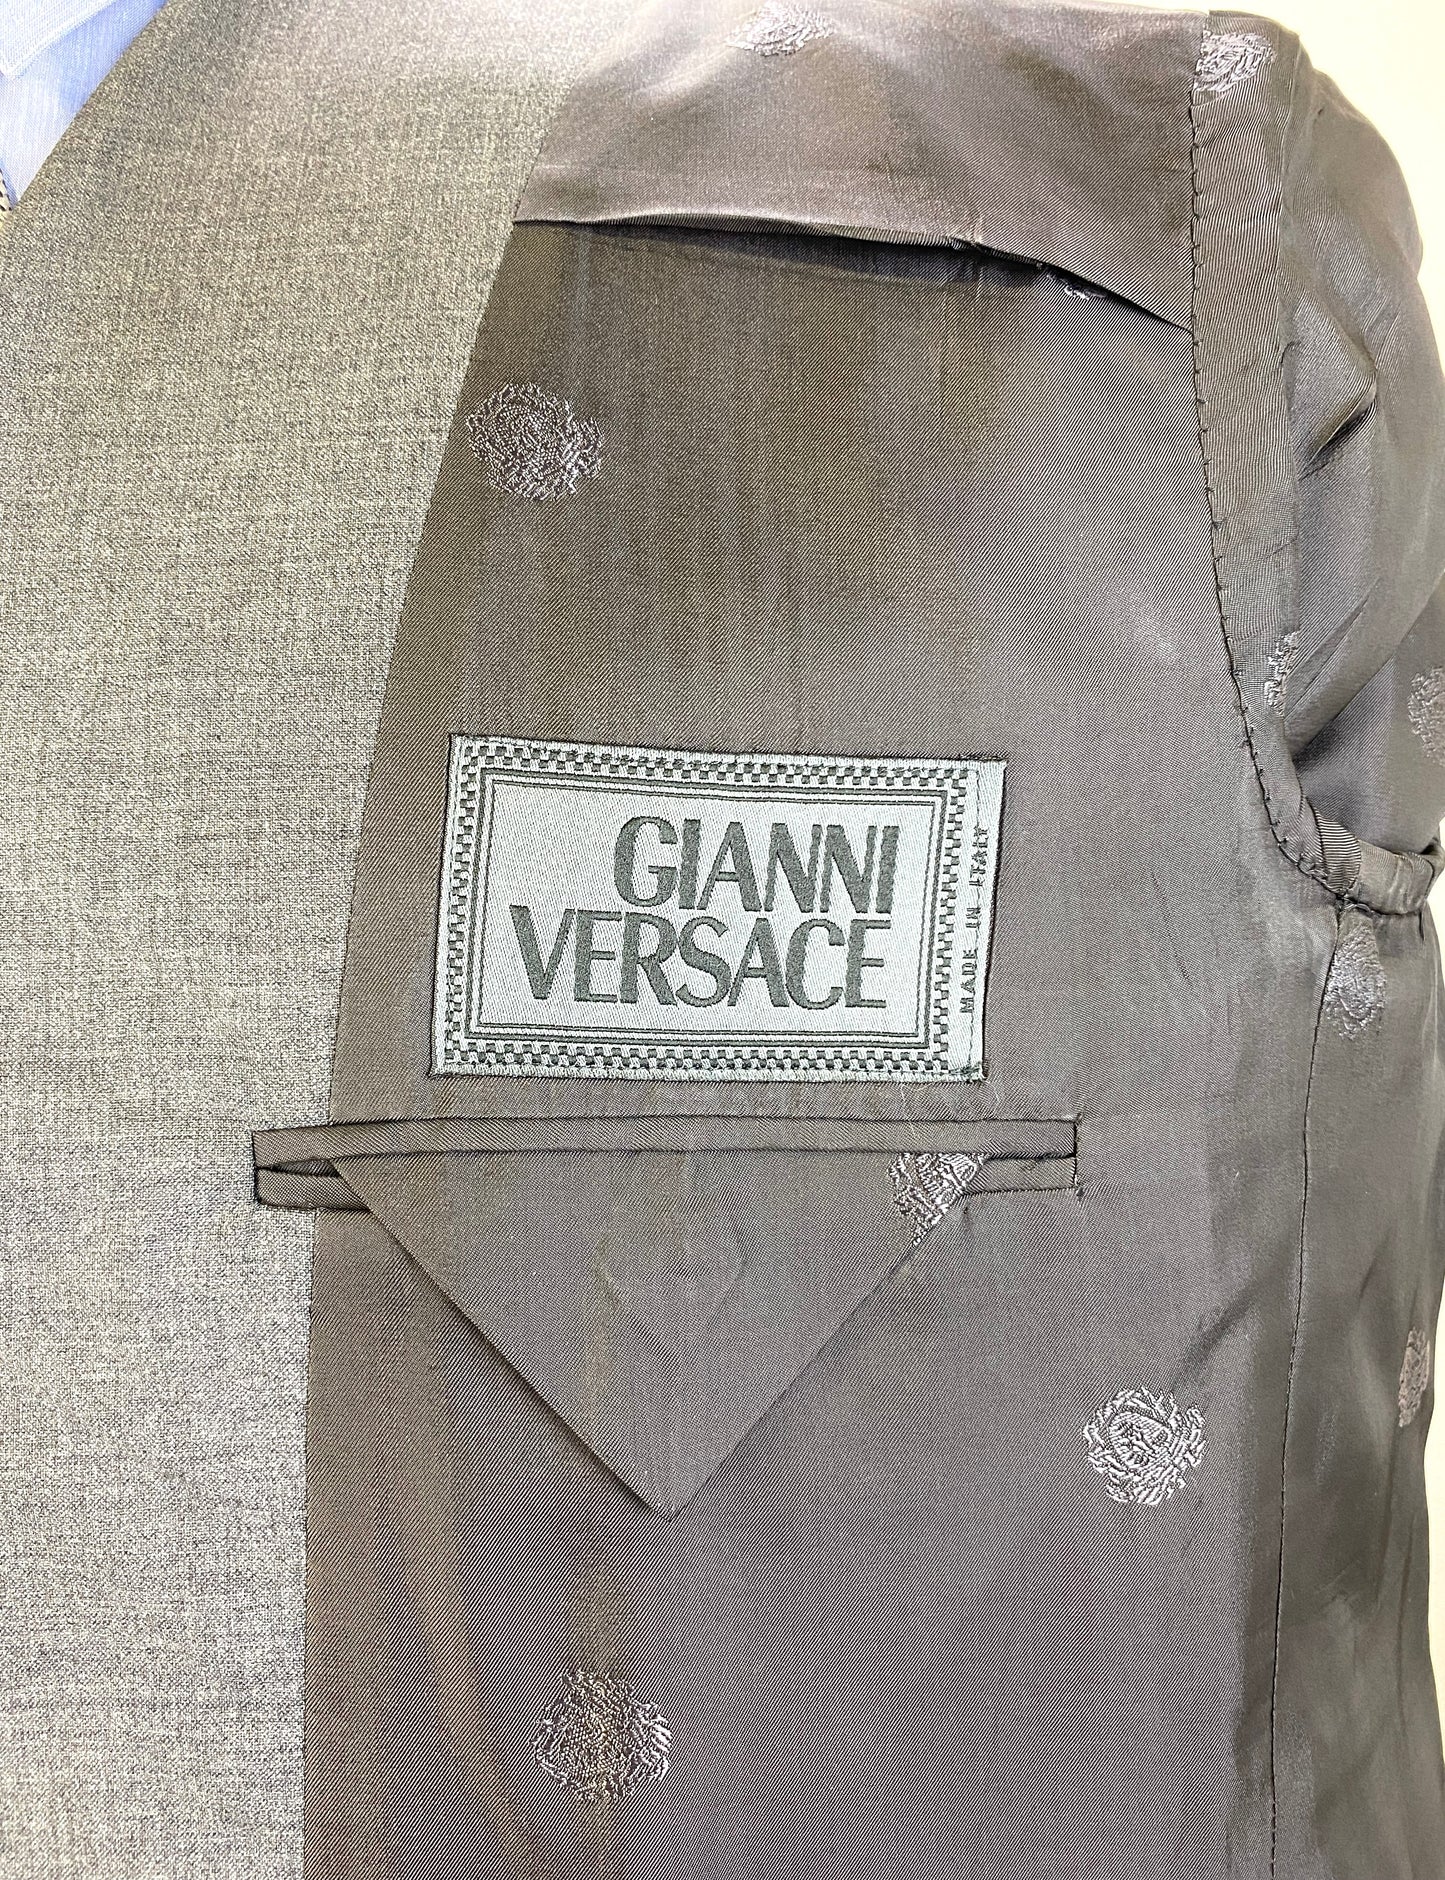 1980s Vintage Grey Wool Men's Designer Blazer, Gianni Versace Jacket, C40